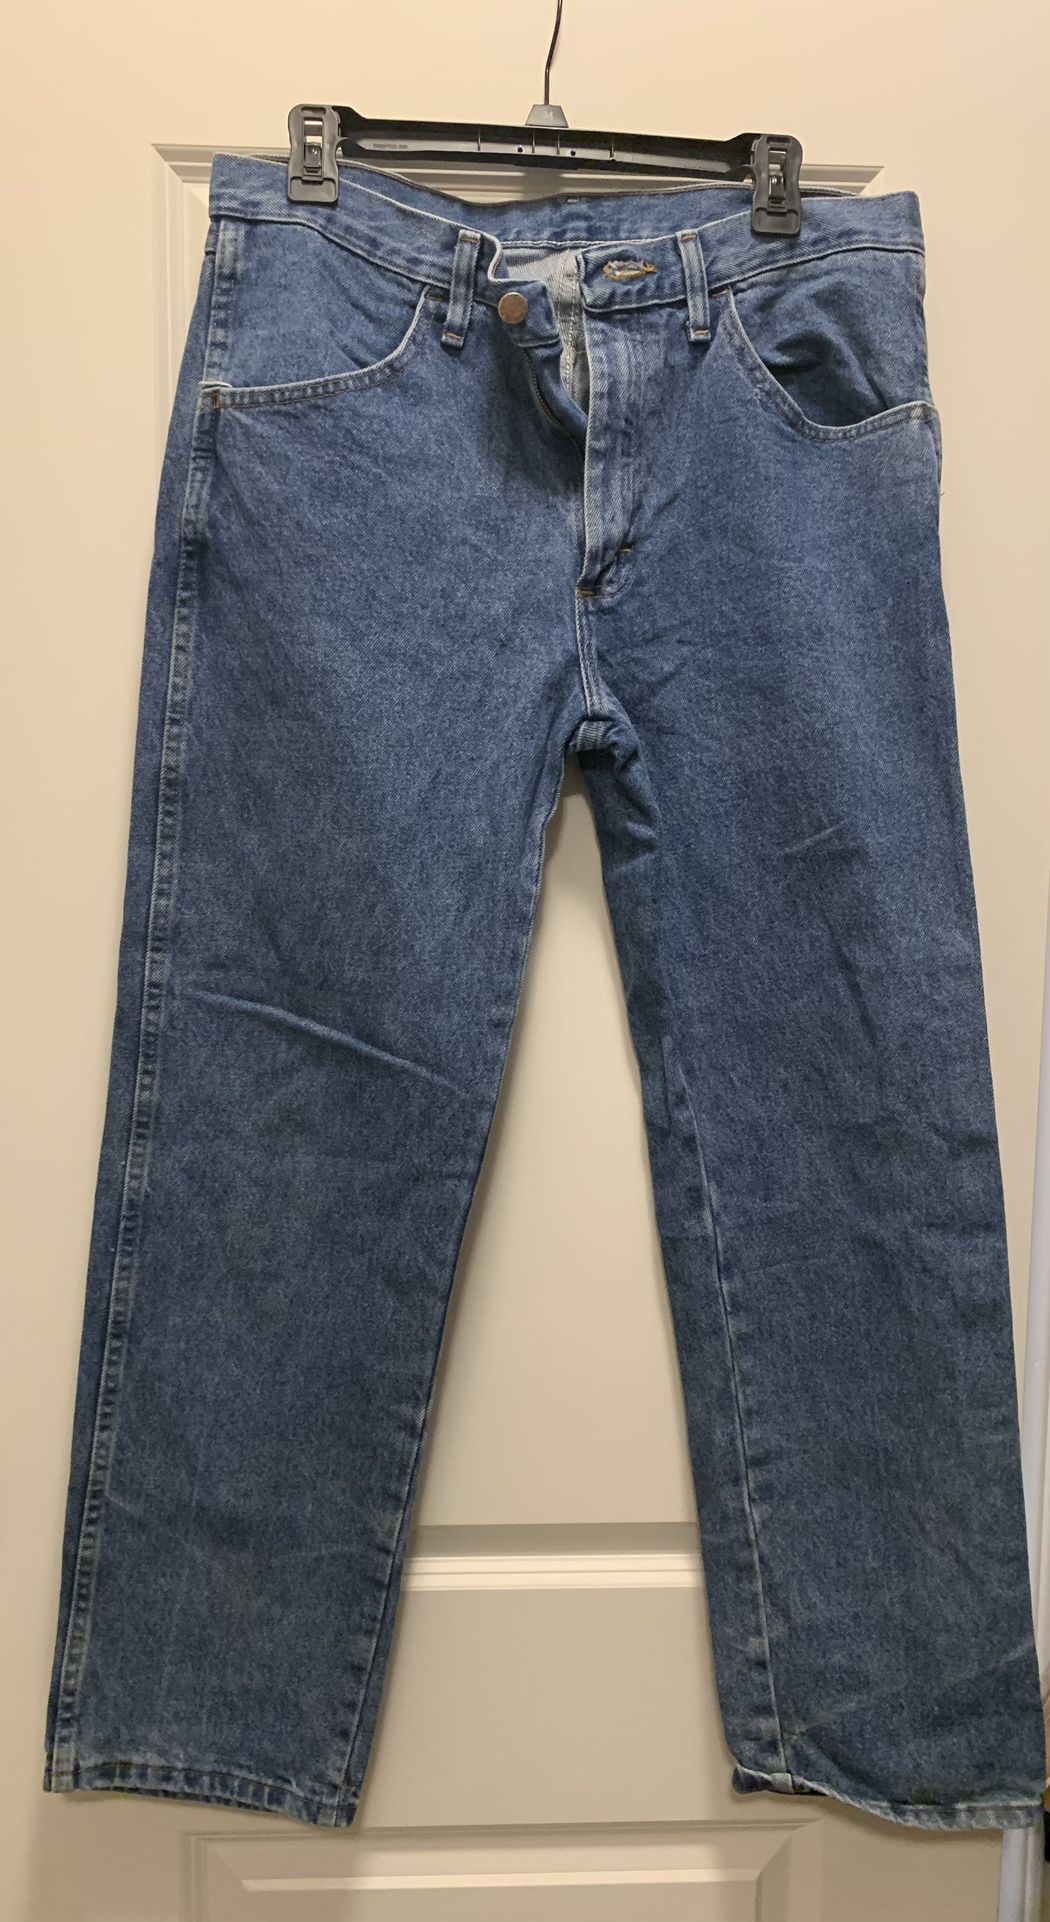 Rustler/Levi’s Men’s Jeans